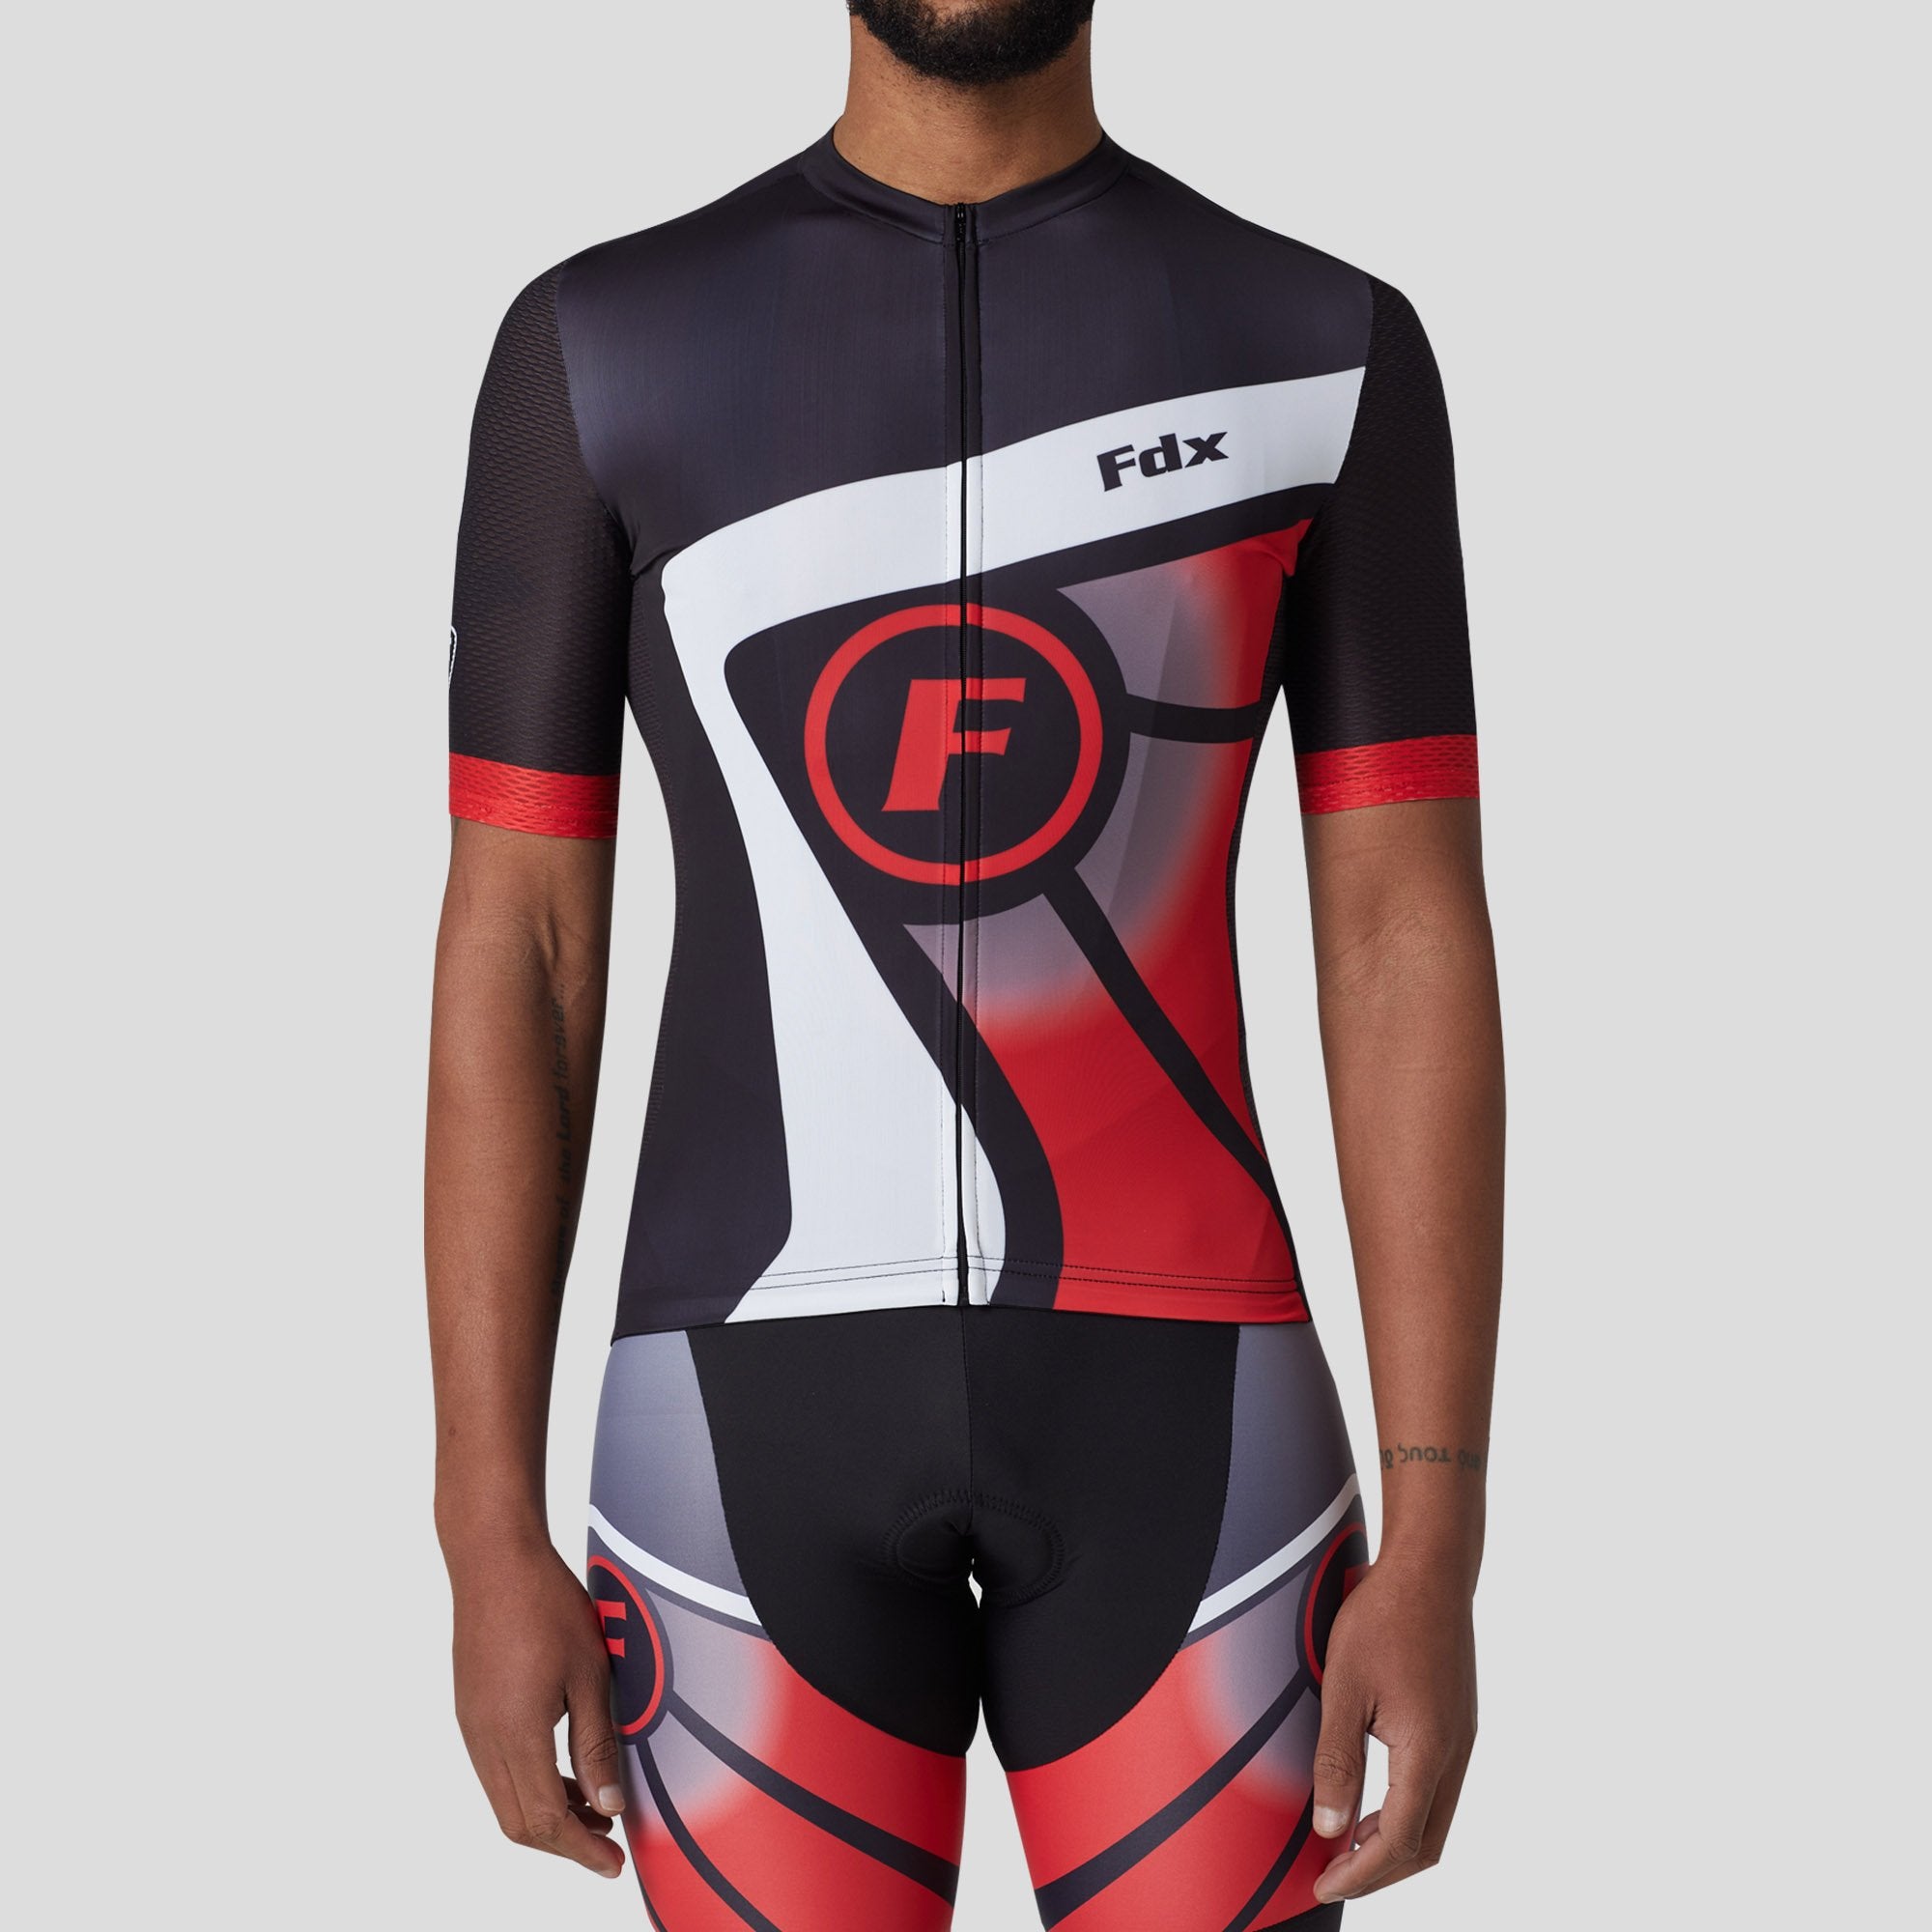 Fdx Mens Black & Red Short Sleeve Cycling Jersey for Summer Best Road Bike Wear Top Light Weight, Full Zipper, Pockets & Hi-viz Reflectors - Signature